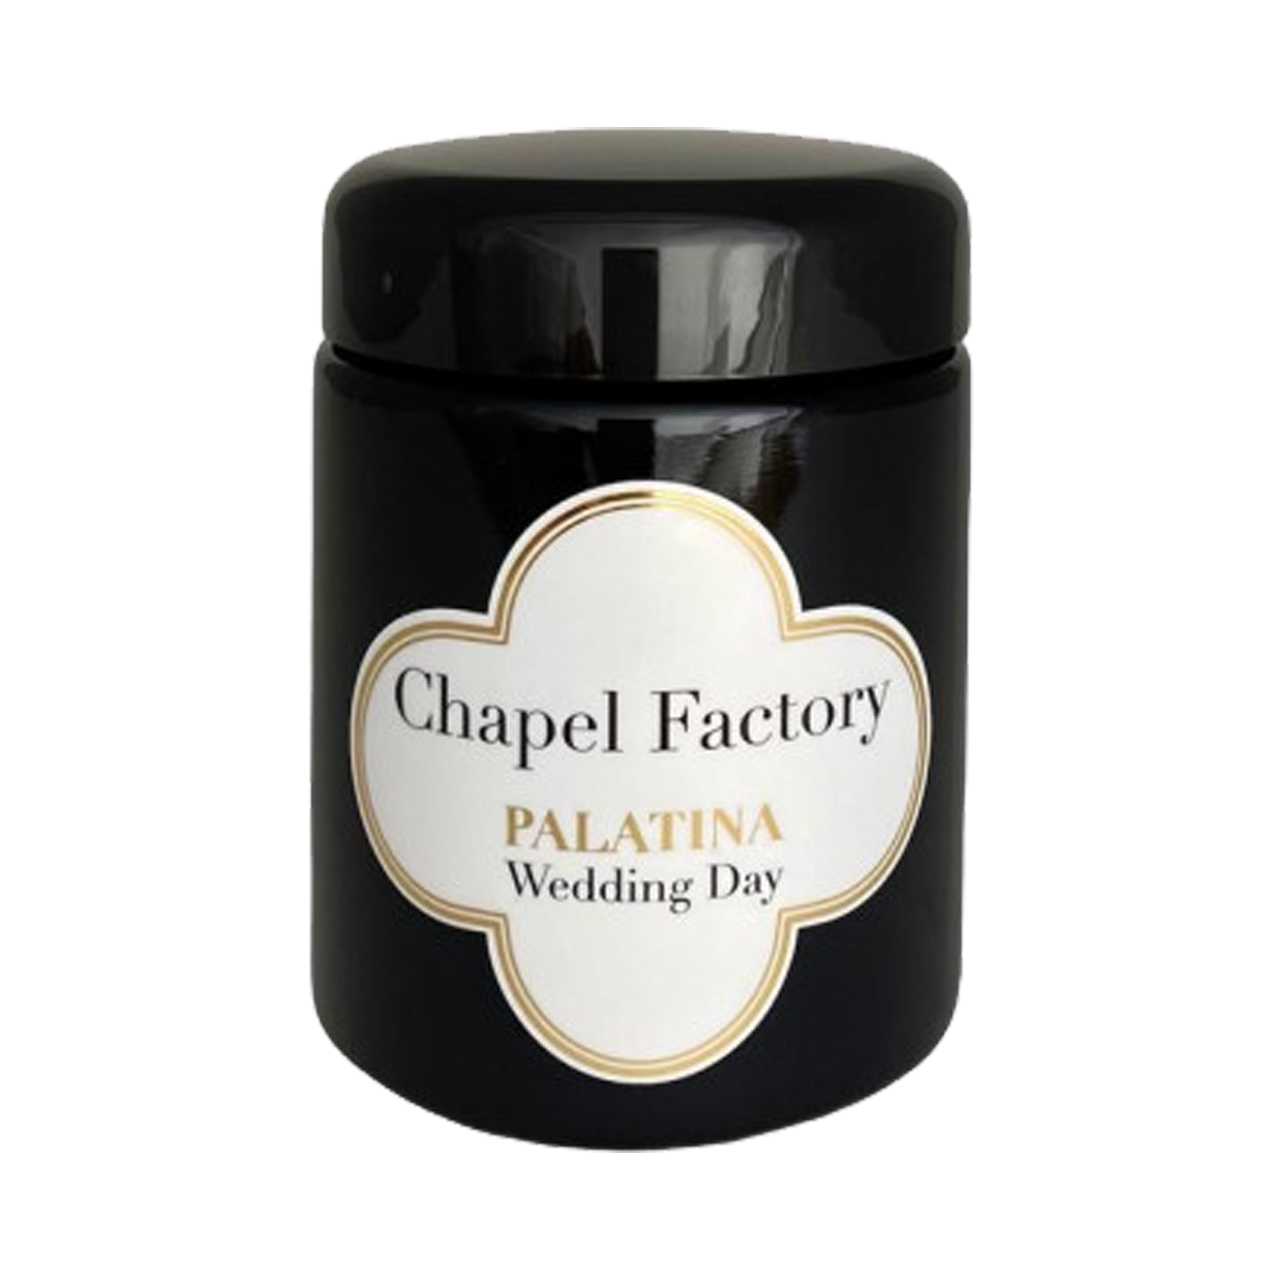 palatina chapel factory daring light perfumes niche barcelona